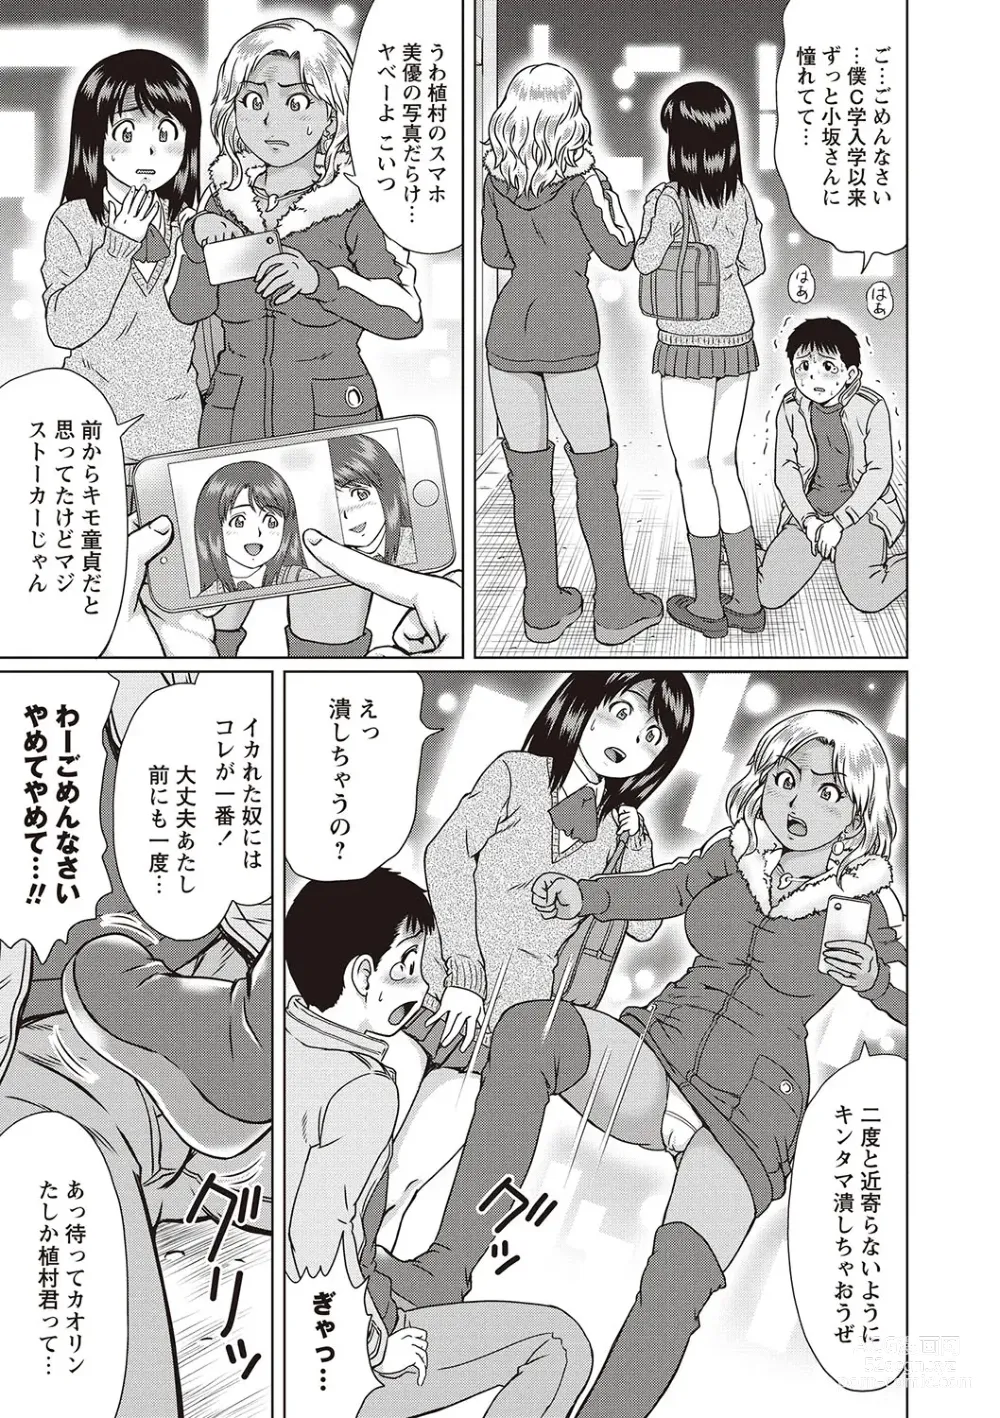 Page 90 of manga Doutei Revenge SEX